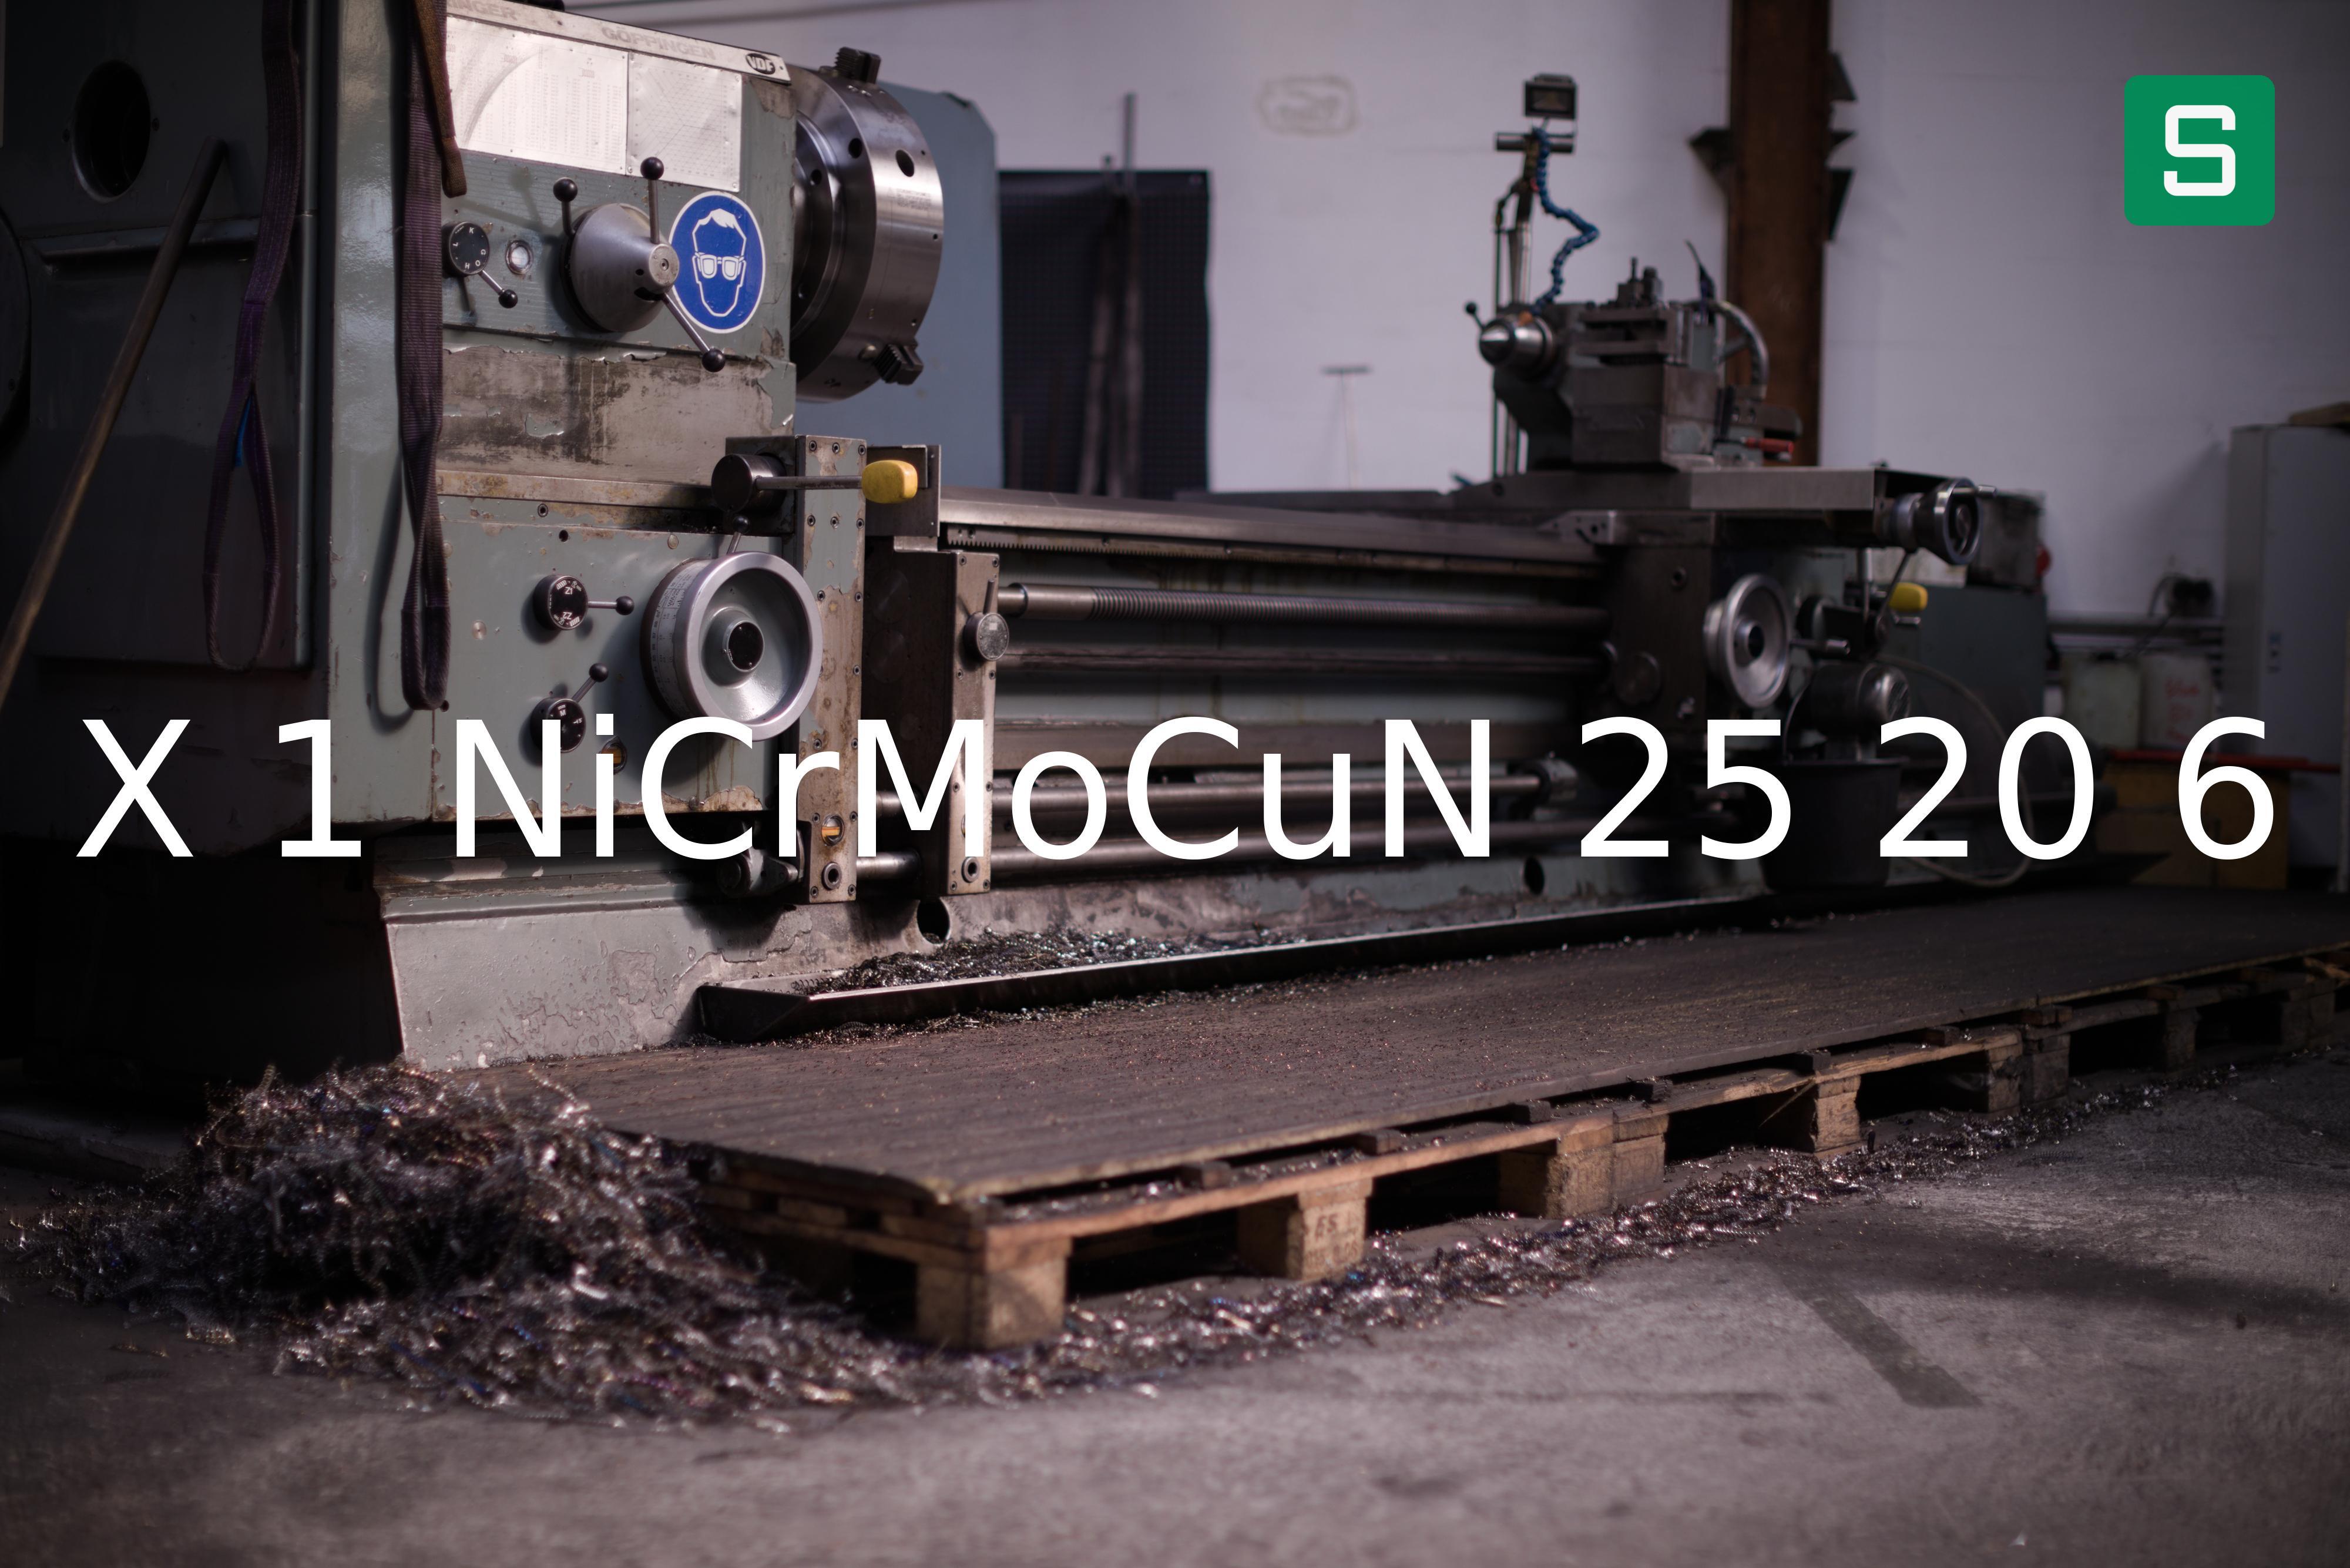 Steel Material: X 1 NiCrMoCuN 25 20 6